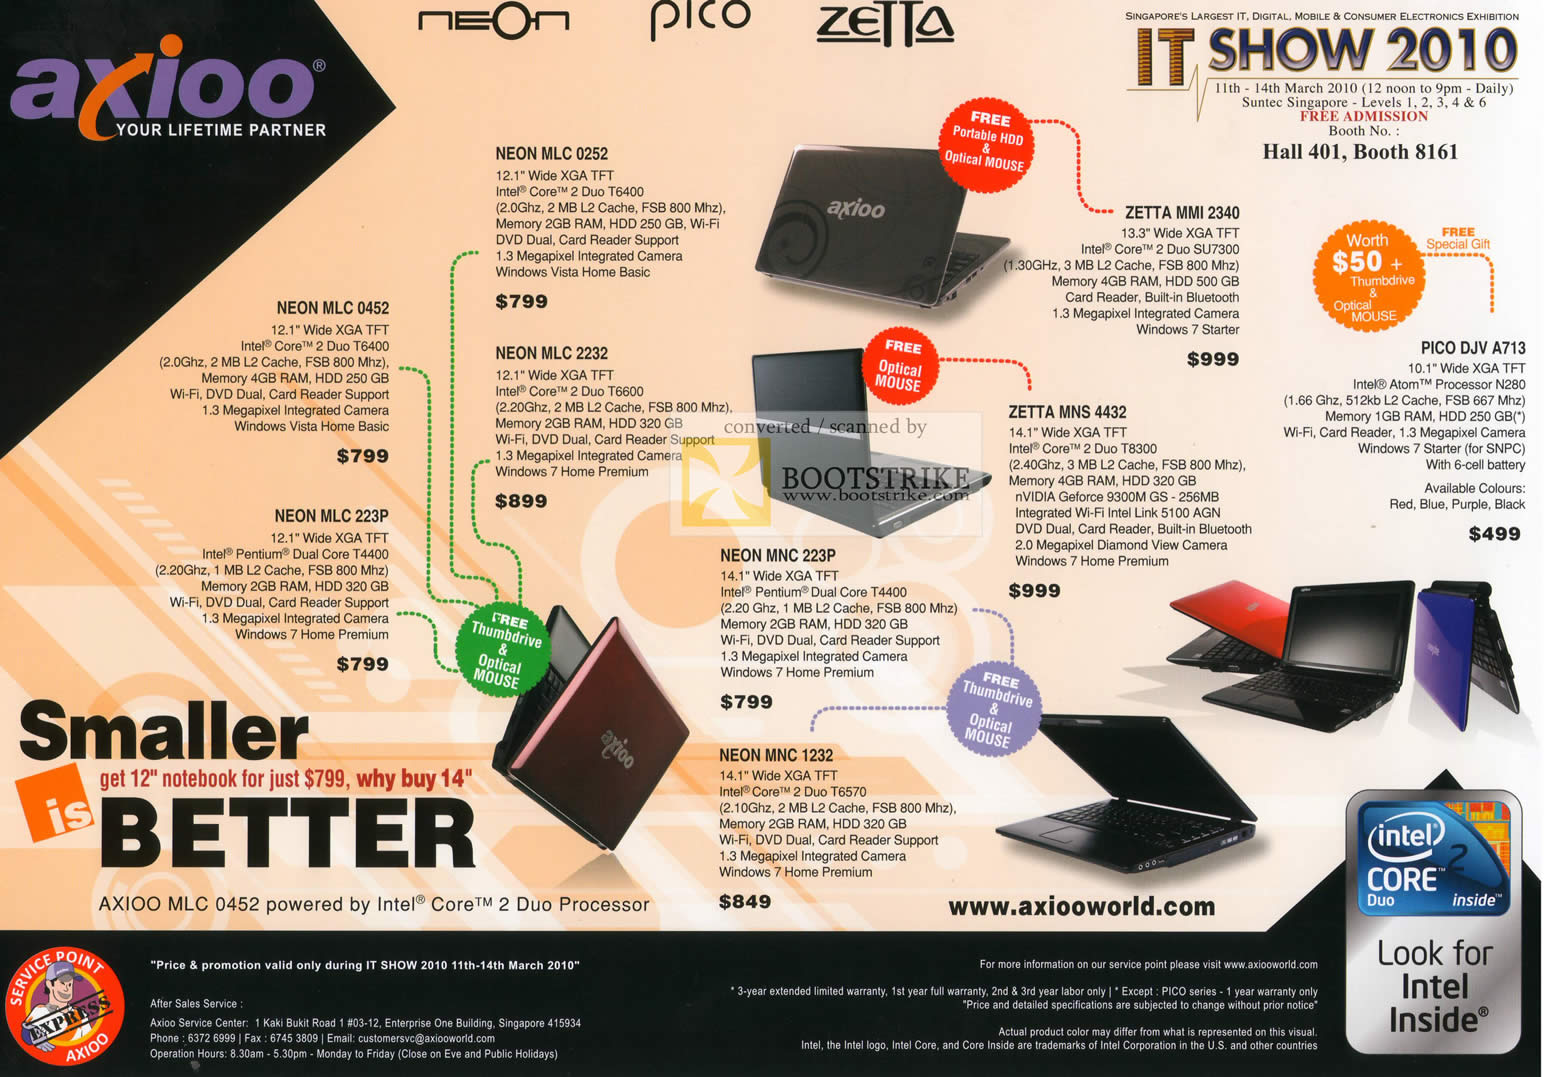 IT Show 2010 price list image brochure of Axioo Notebooks Neon MLC 0452 223P 0252 2232 MNC 223P 1232 Zetta Mmi 2340 MNS 4432 Pico DJV A713